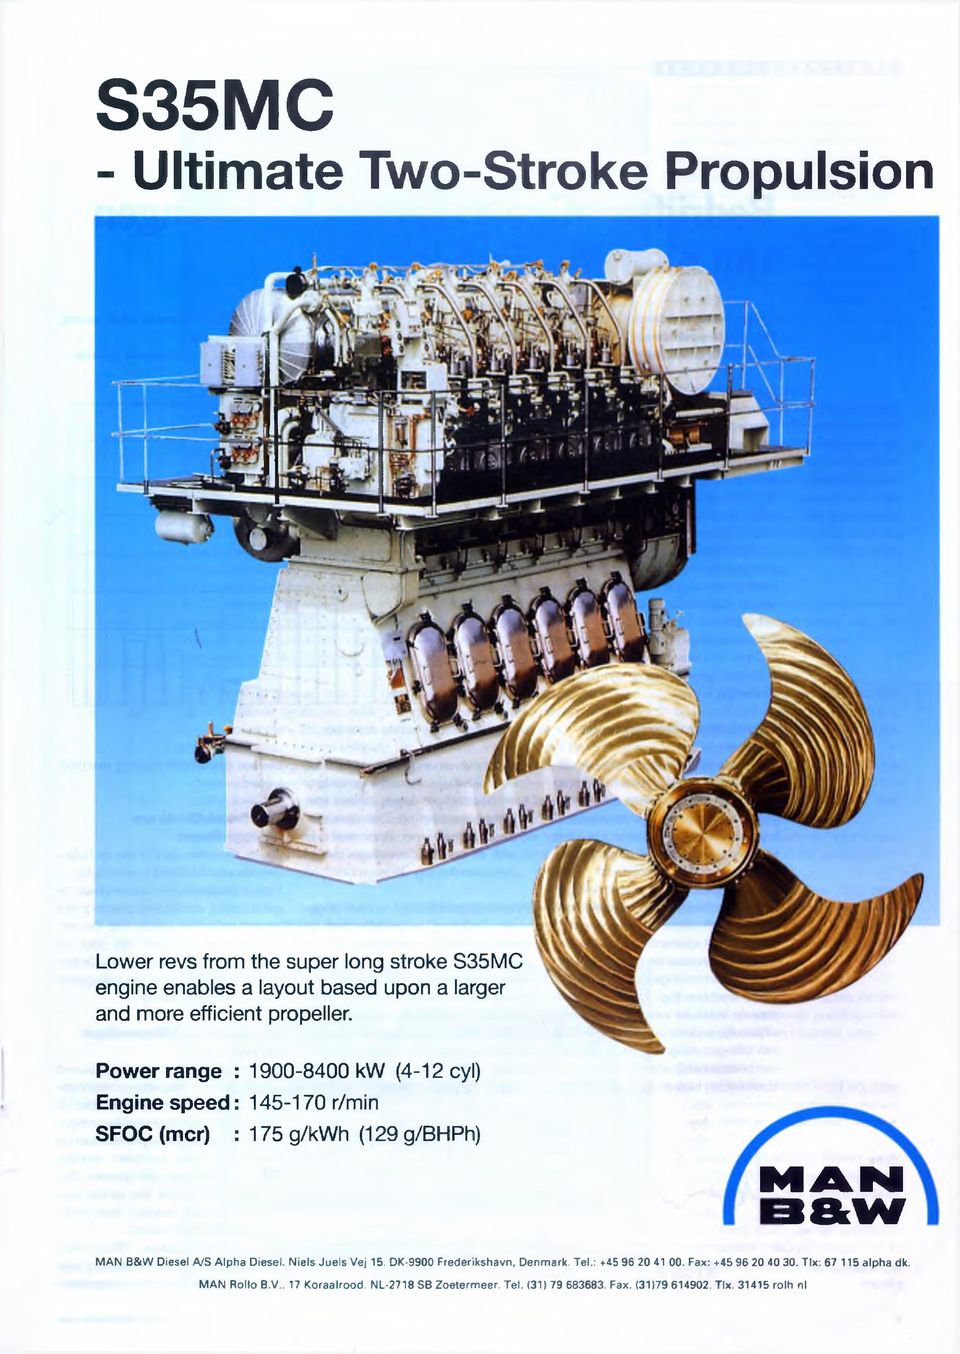 Power range : 1900-8400 kw (4-12 cyl) Engine speed : 145-170 r/min S F O C (m cr) : 175 g/kwh (129 g/bhph) MAN 3aw MAN B&W Diesel A/S